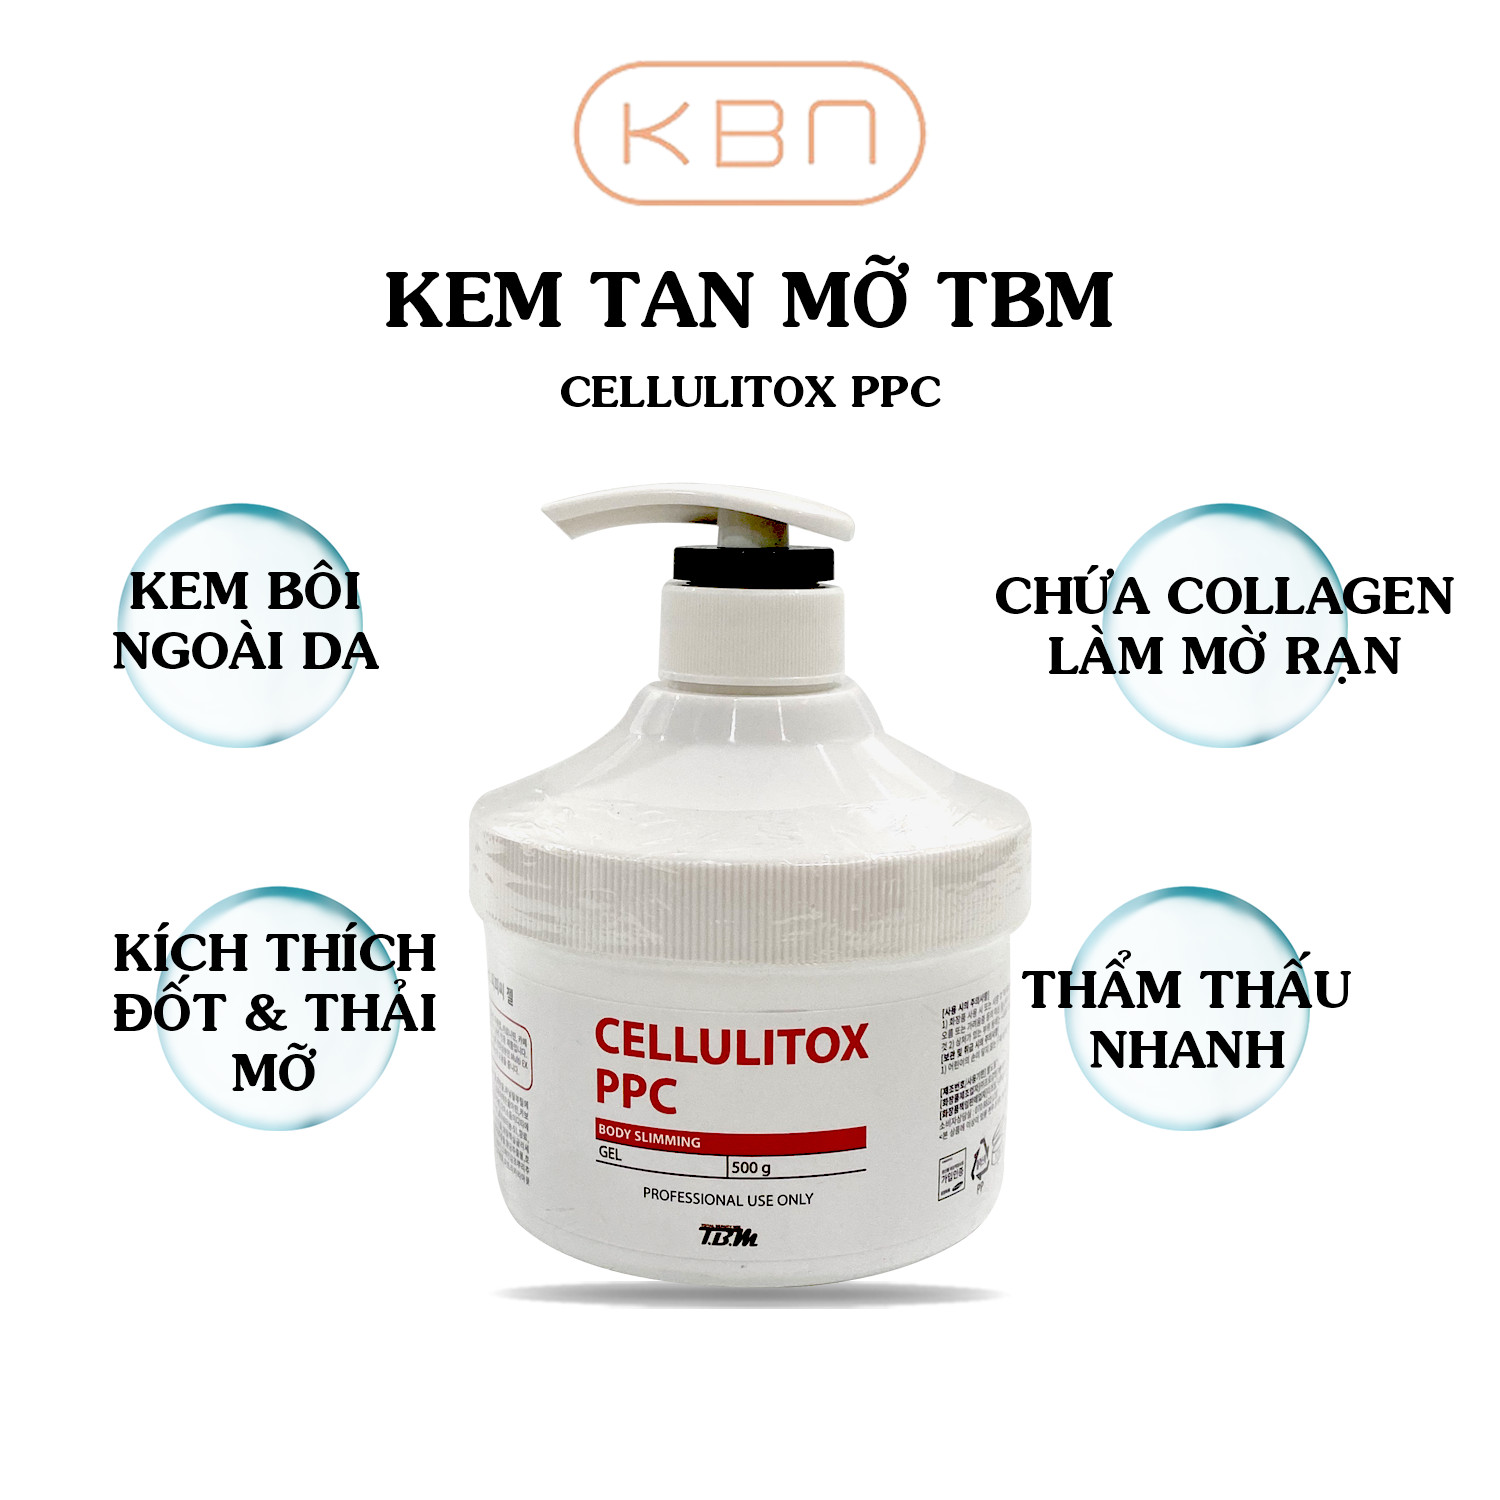 Kem Tan Mỡ TBM Cellulitox PPC Gel Hàn Quốc